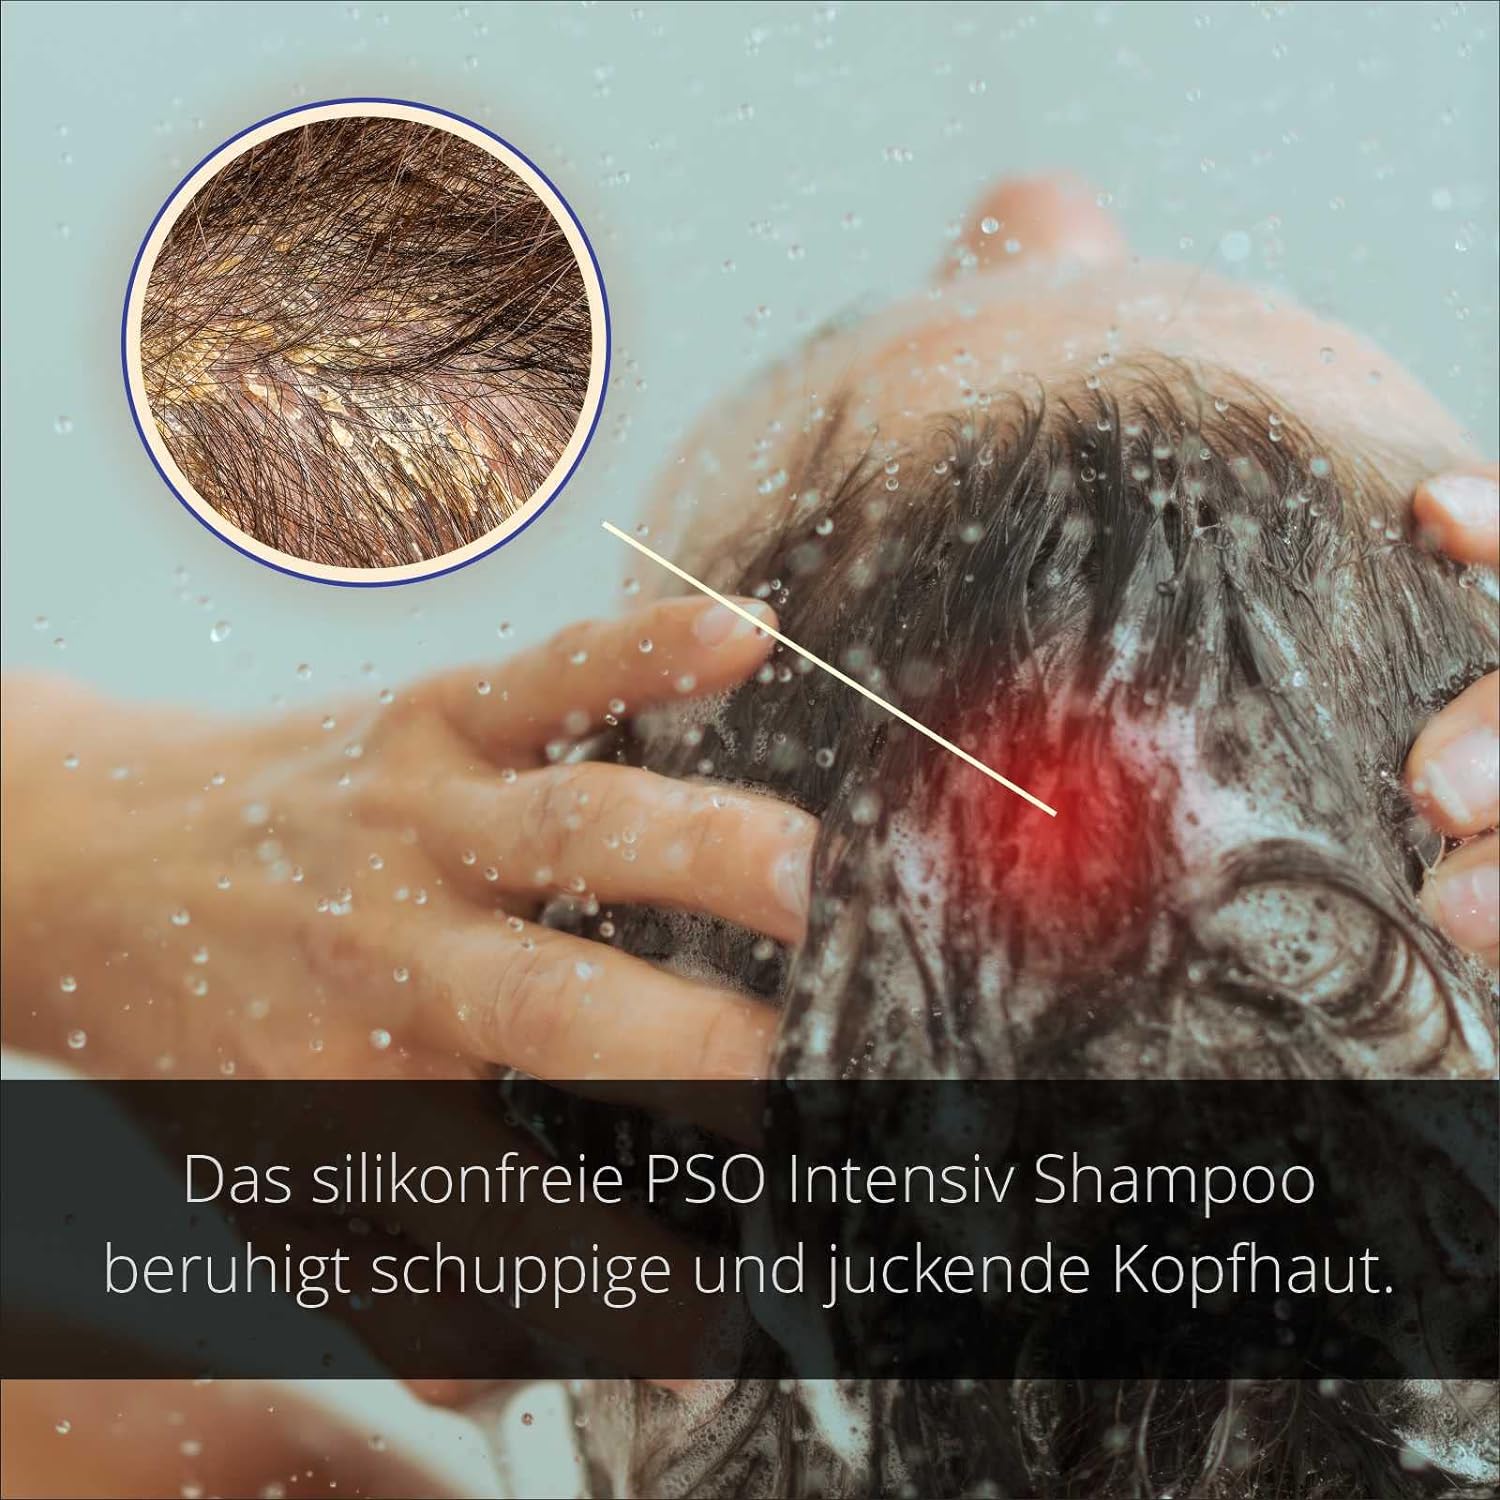 PSO Intensiv Shampoo - Spezialpflege bei Psoriasis